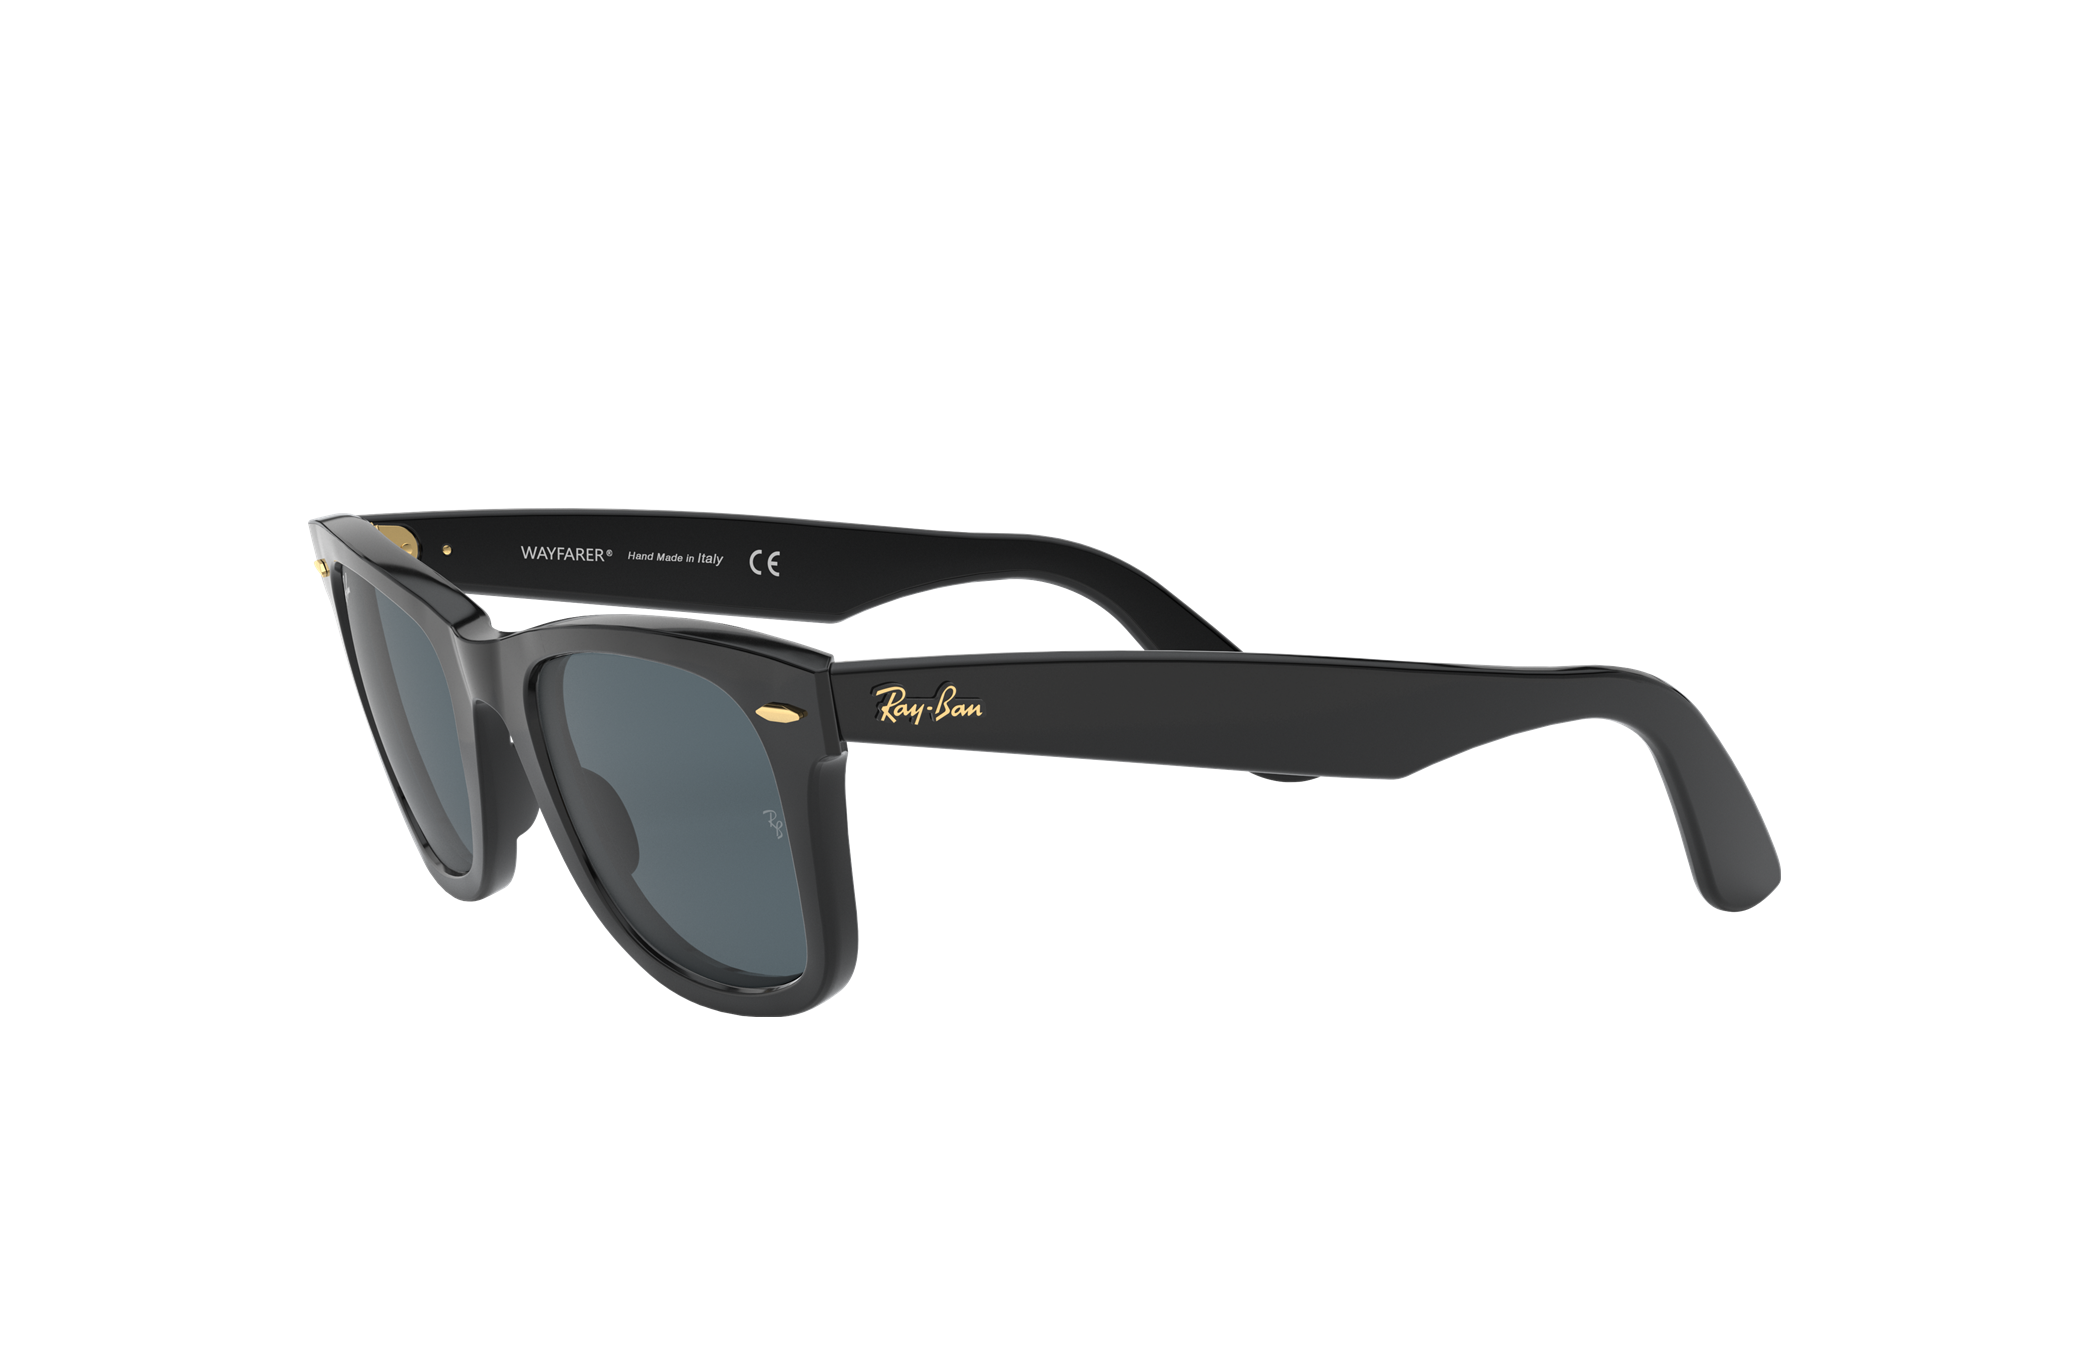 Ray-Ban Original Wayfarer Sunglasses | Urban Outfitters